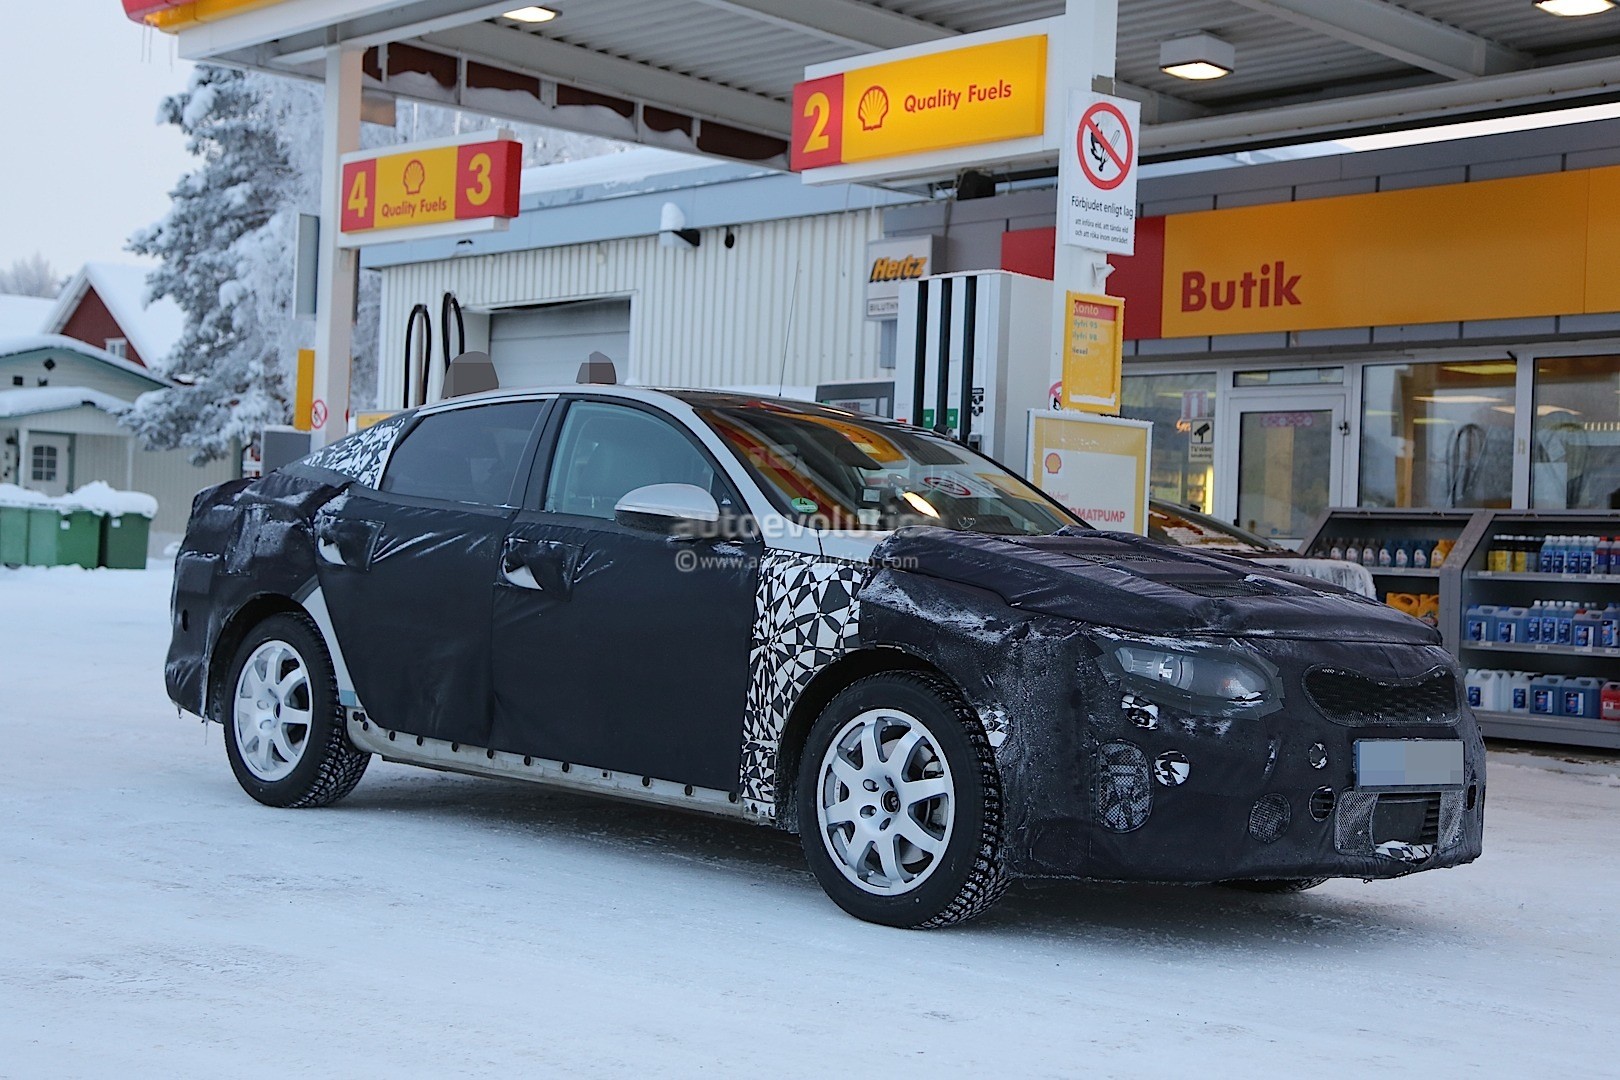 2016 Kia Optima Spied Testing in Extreme Cold - autoevolution